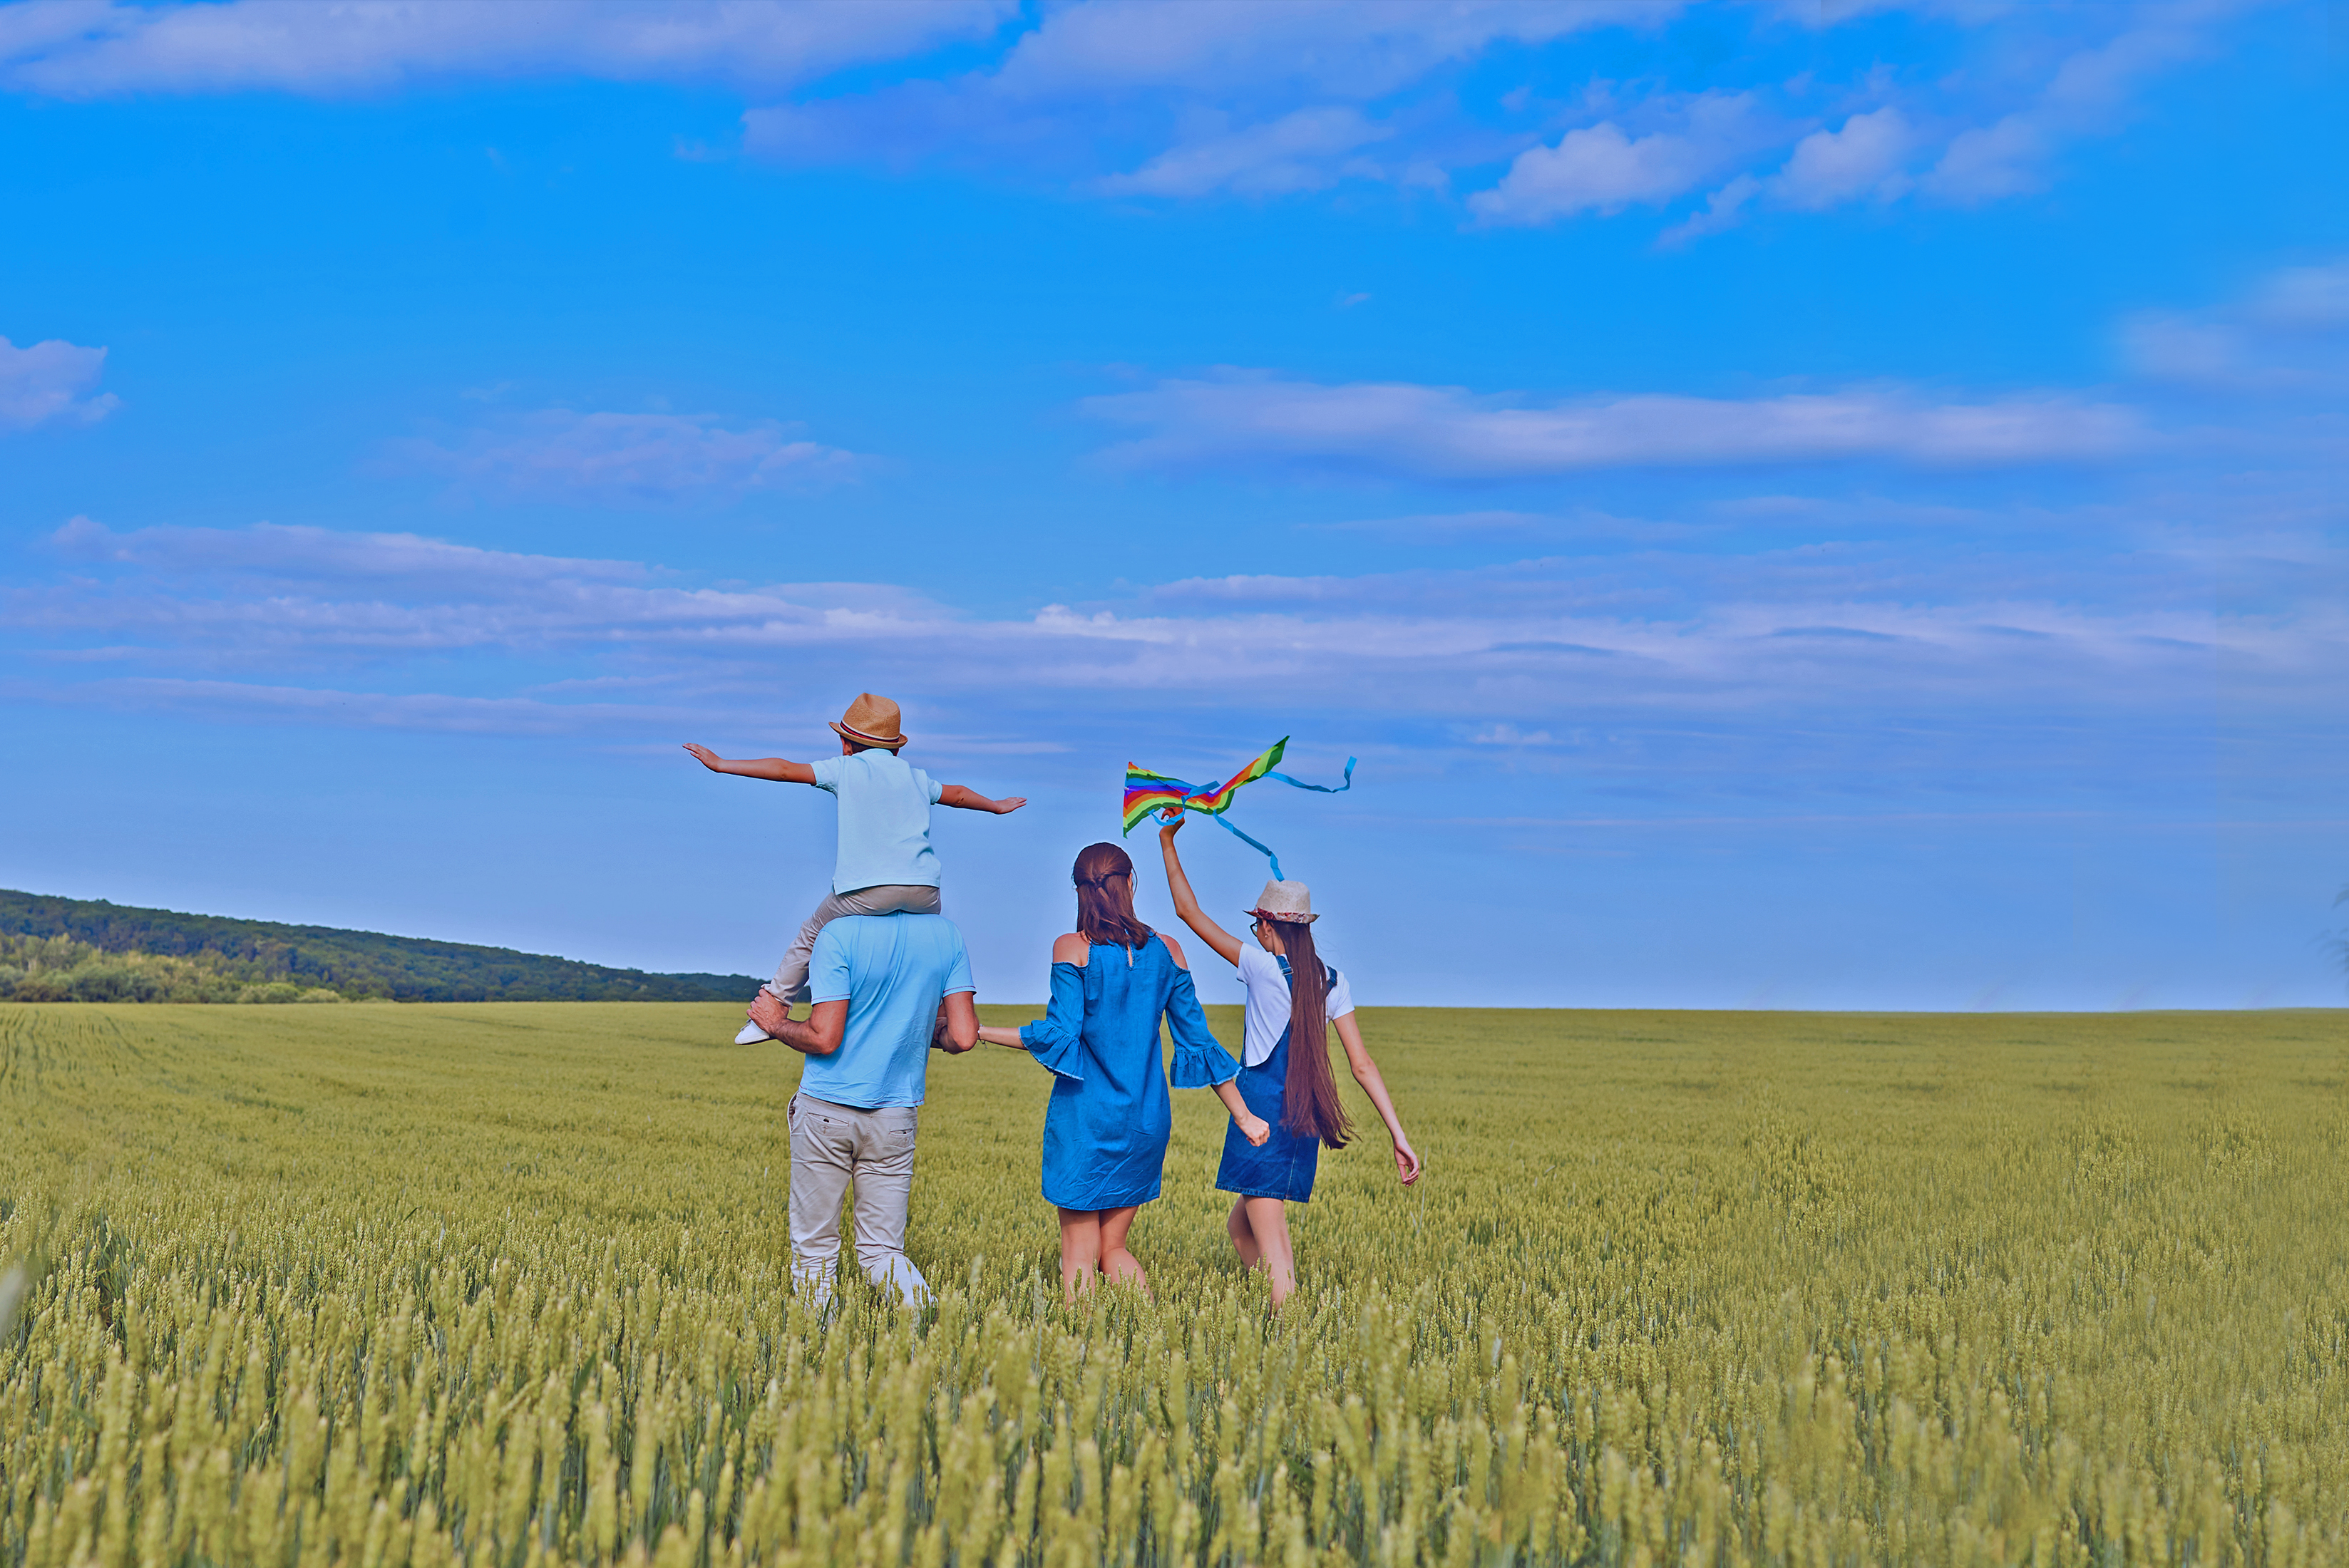 A happy family is walking in a wheat field in the summer